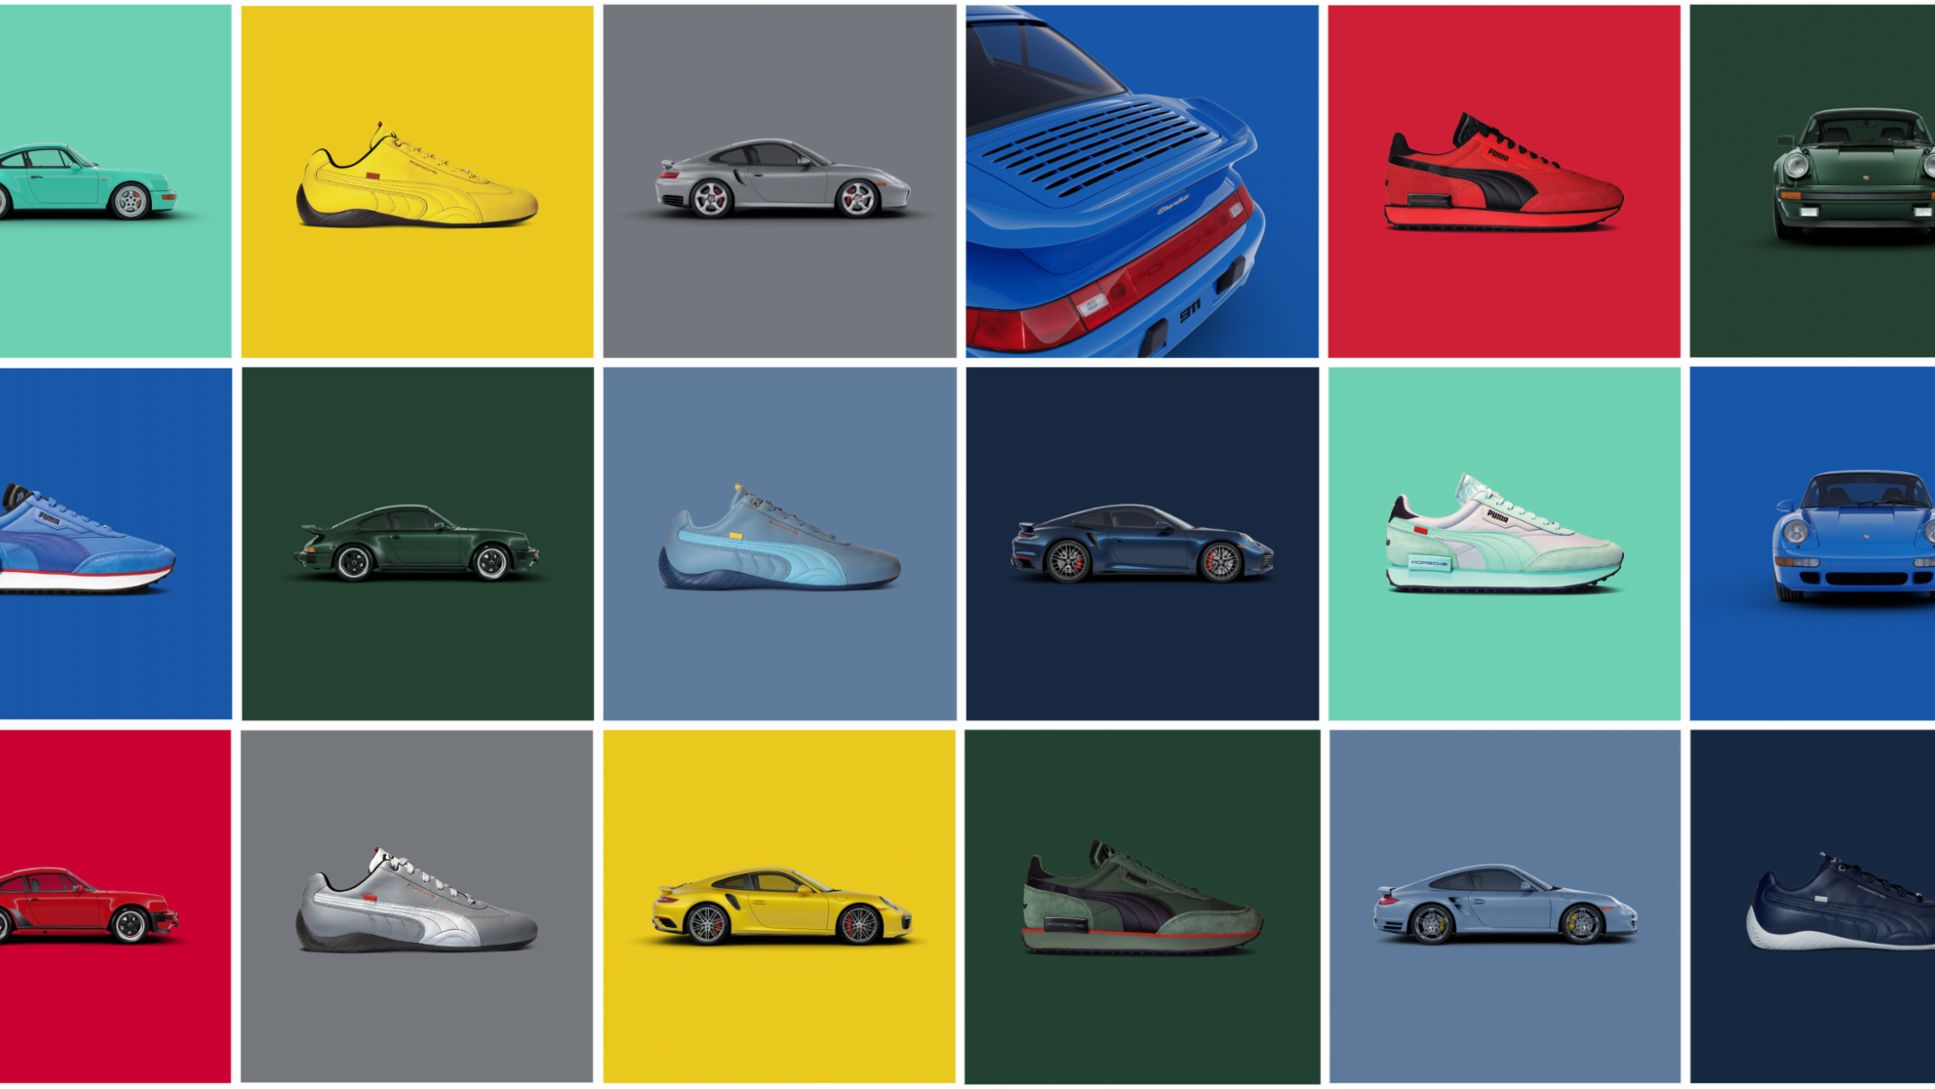 Porsche x PUMA "Icons of Fast" collection, 2020, PCNA